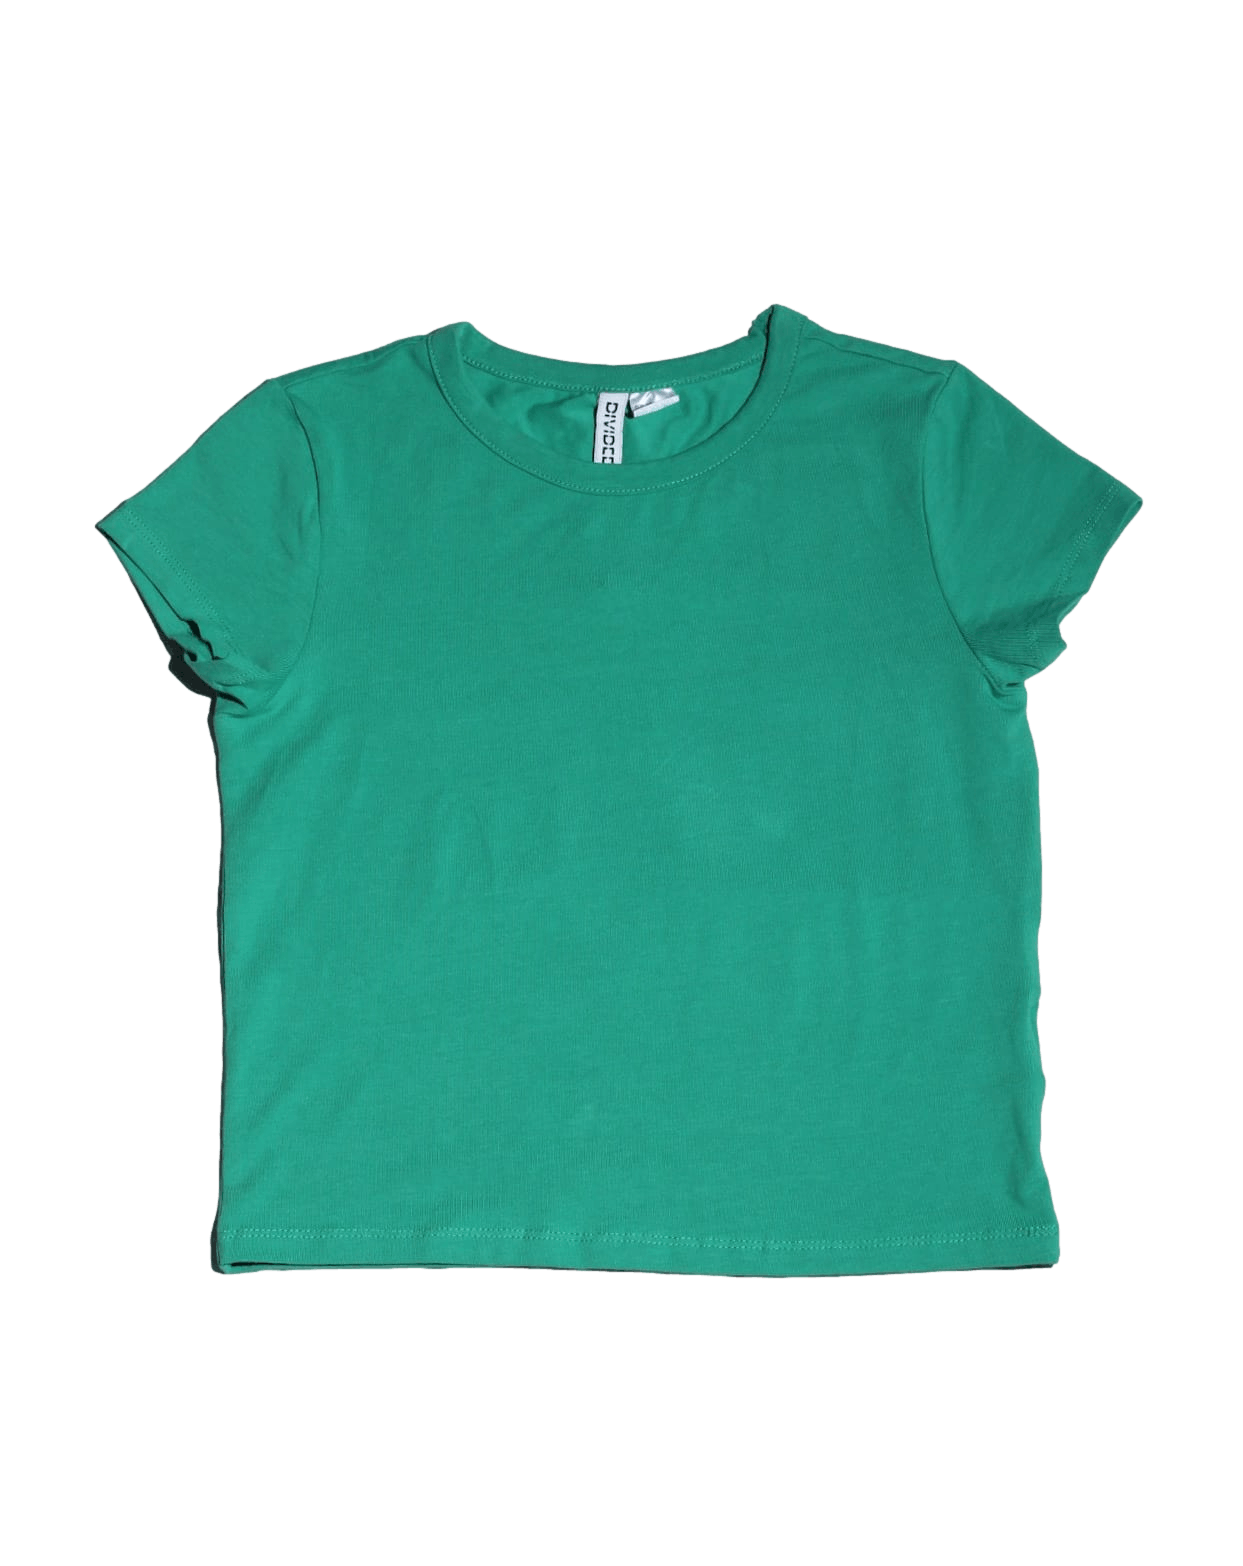 Polo H&M verde de cuello redondo. Busto 76 cm (sin estirar) Largo 44 cm